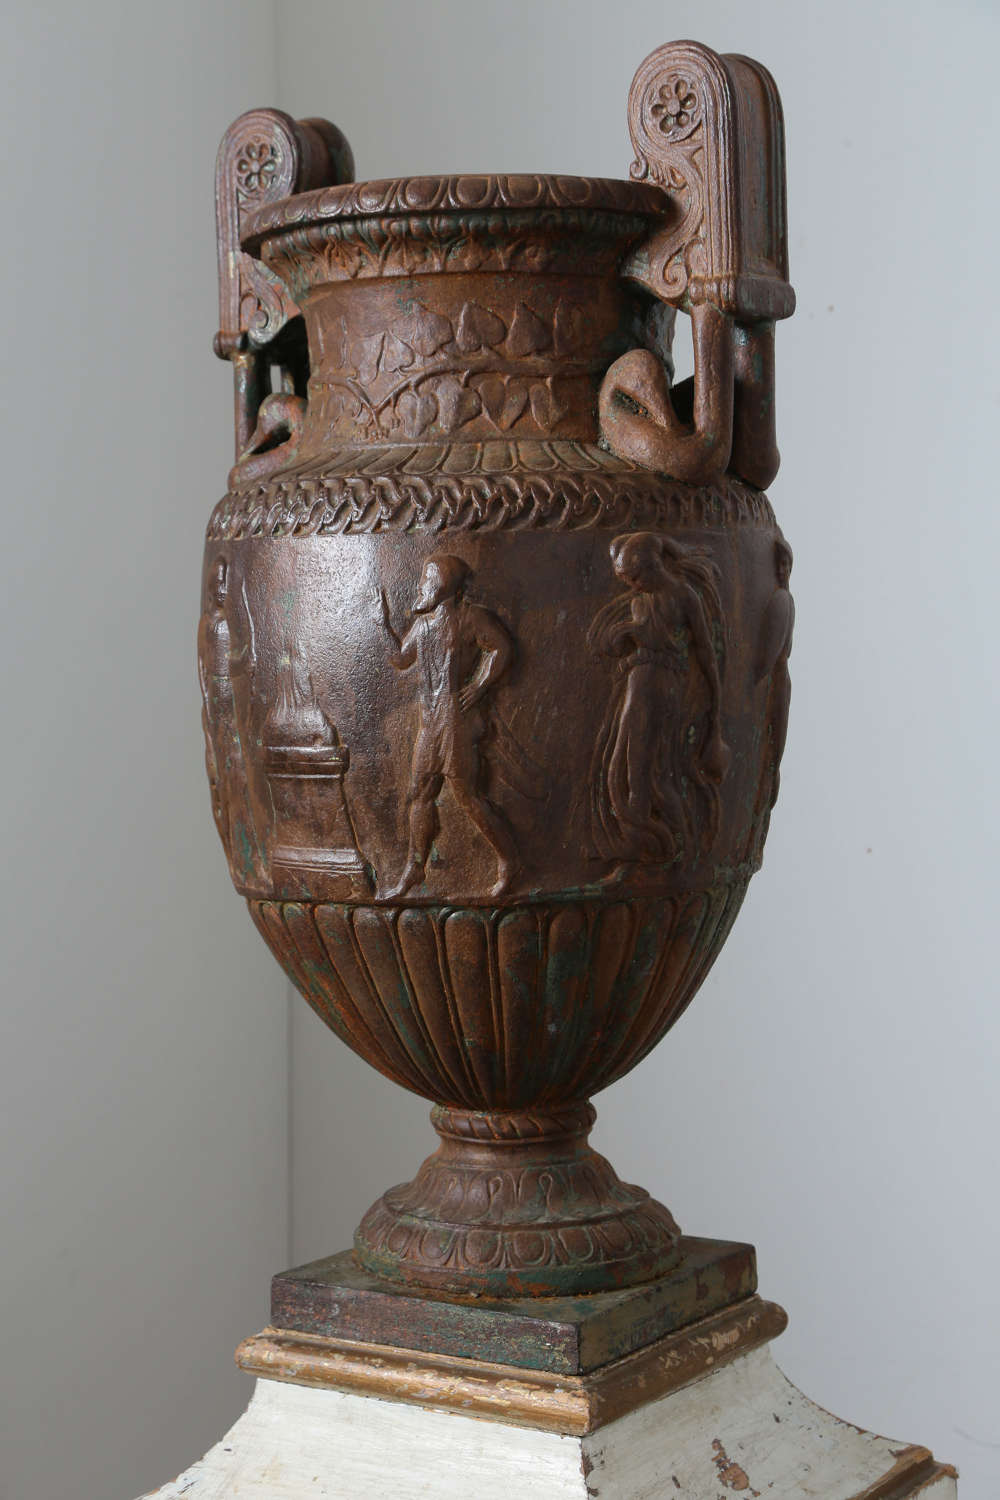 19th century French cast iron urn